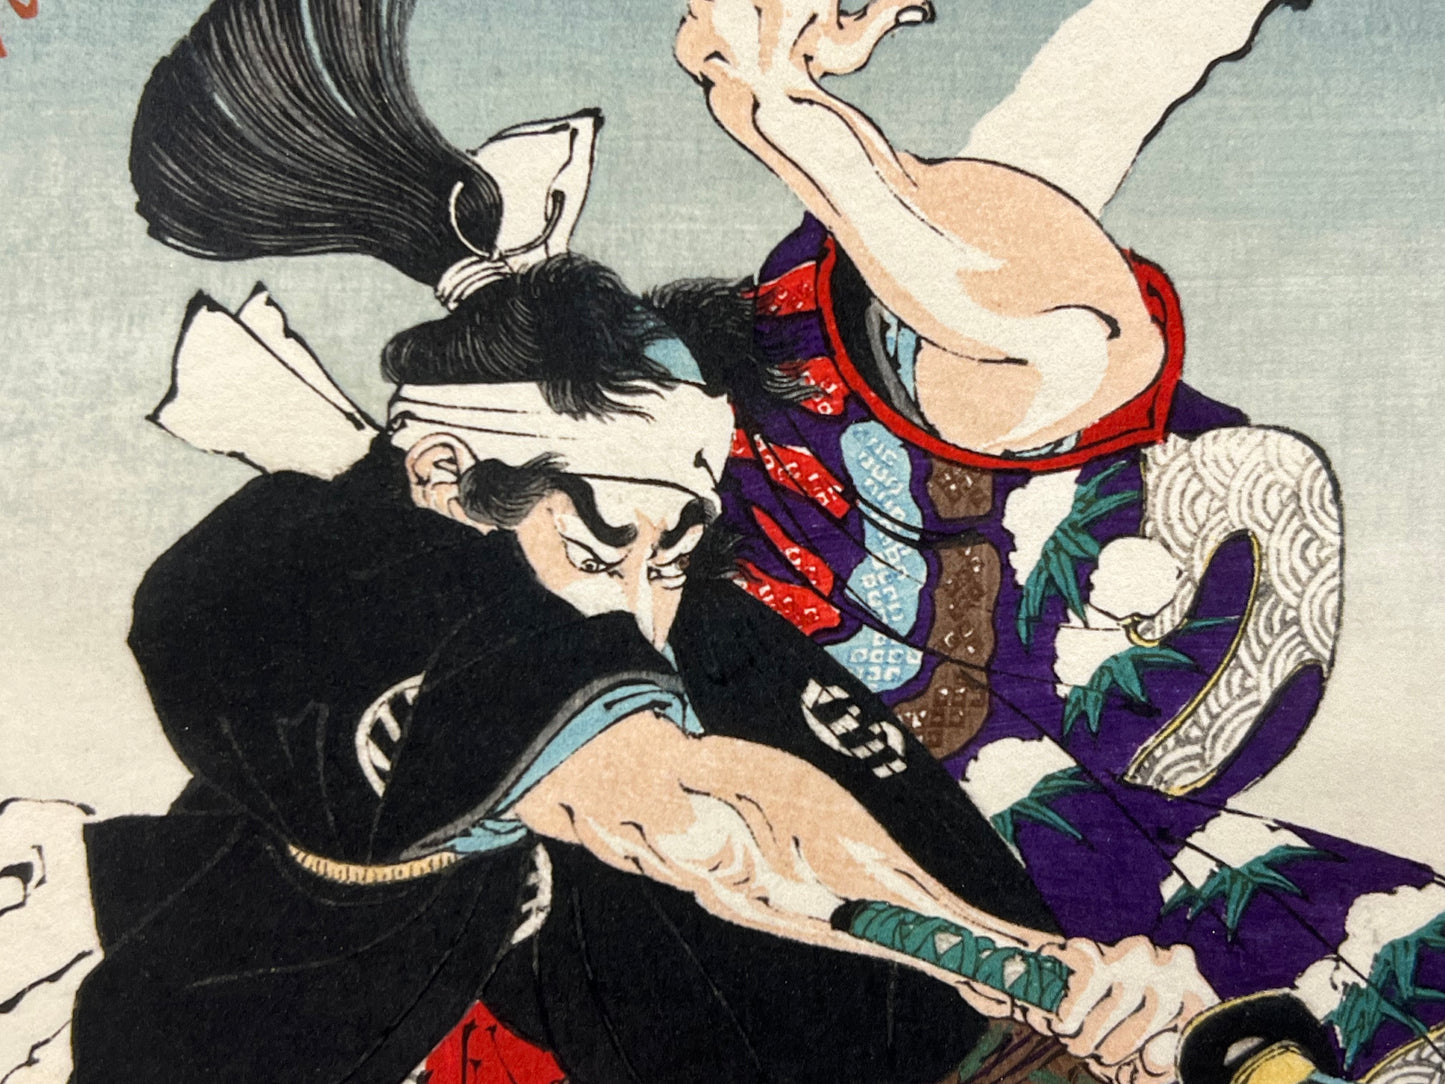 Yoshitoshi Giclee Woodblock Print Samurai 100 Views of the Moon "Dawn Moon & Tumbling Snow" 9"x14"